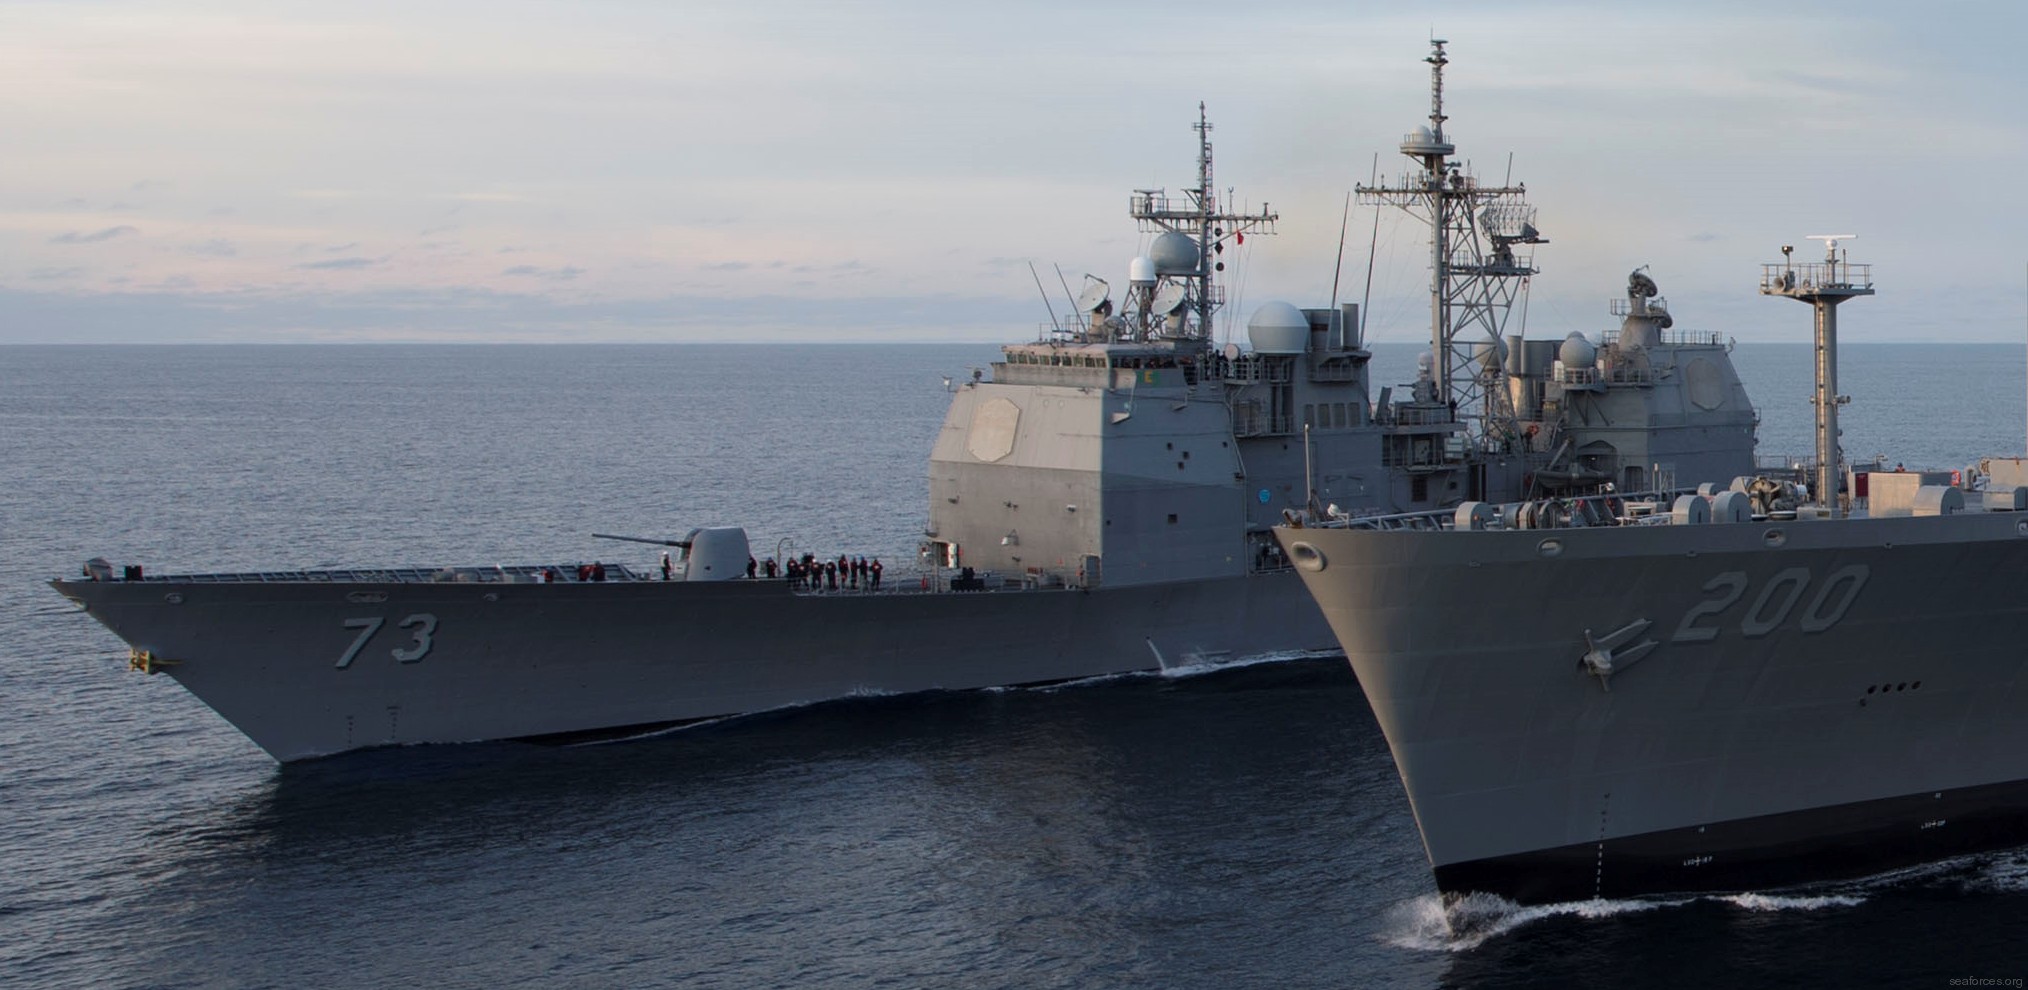 cg-73 uss port royal ticonderoga class guided missile cruiser navy 05